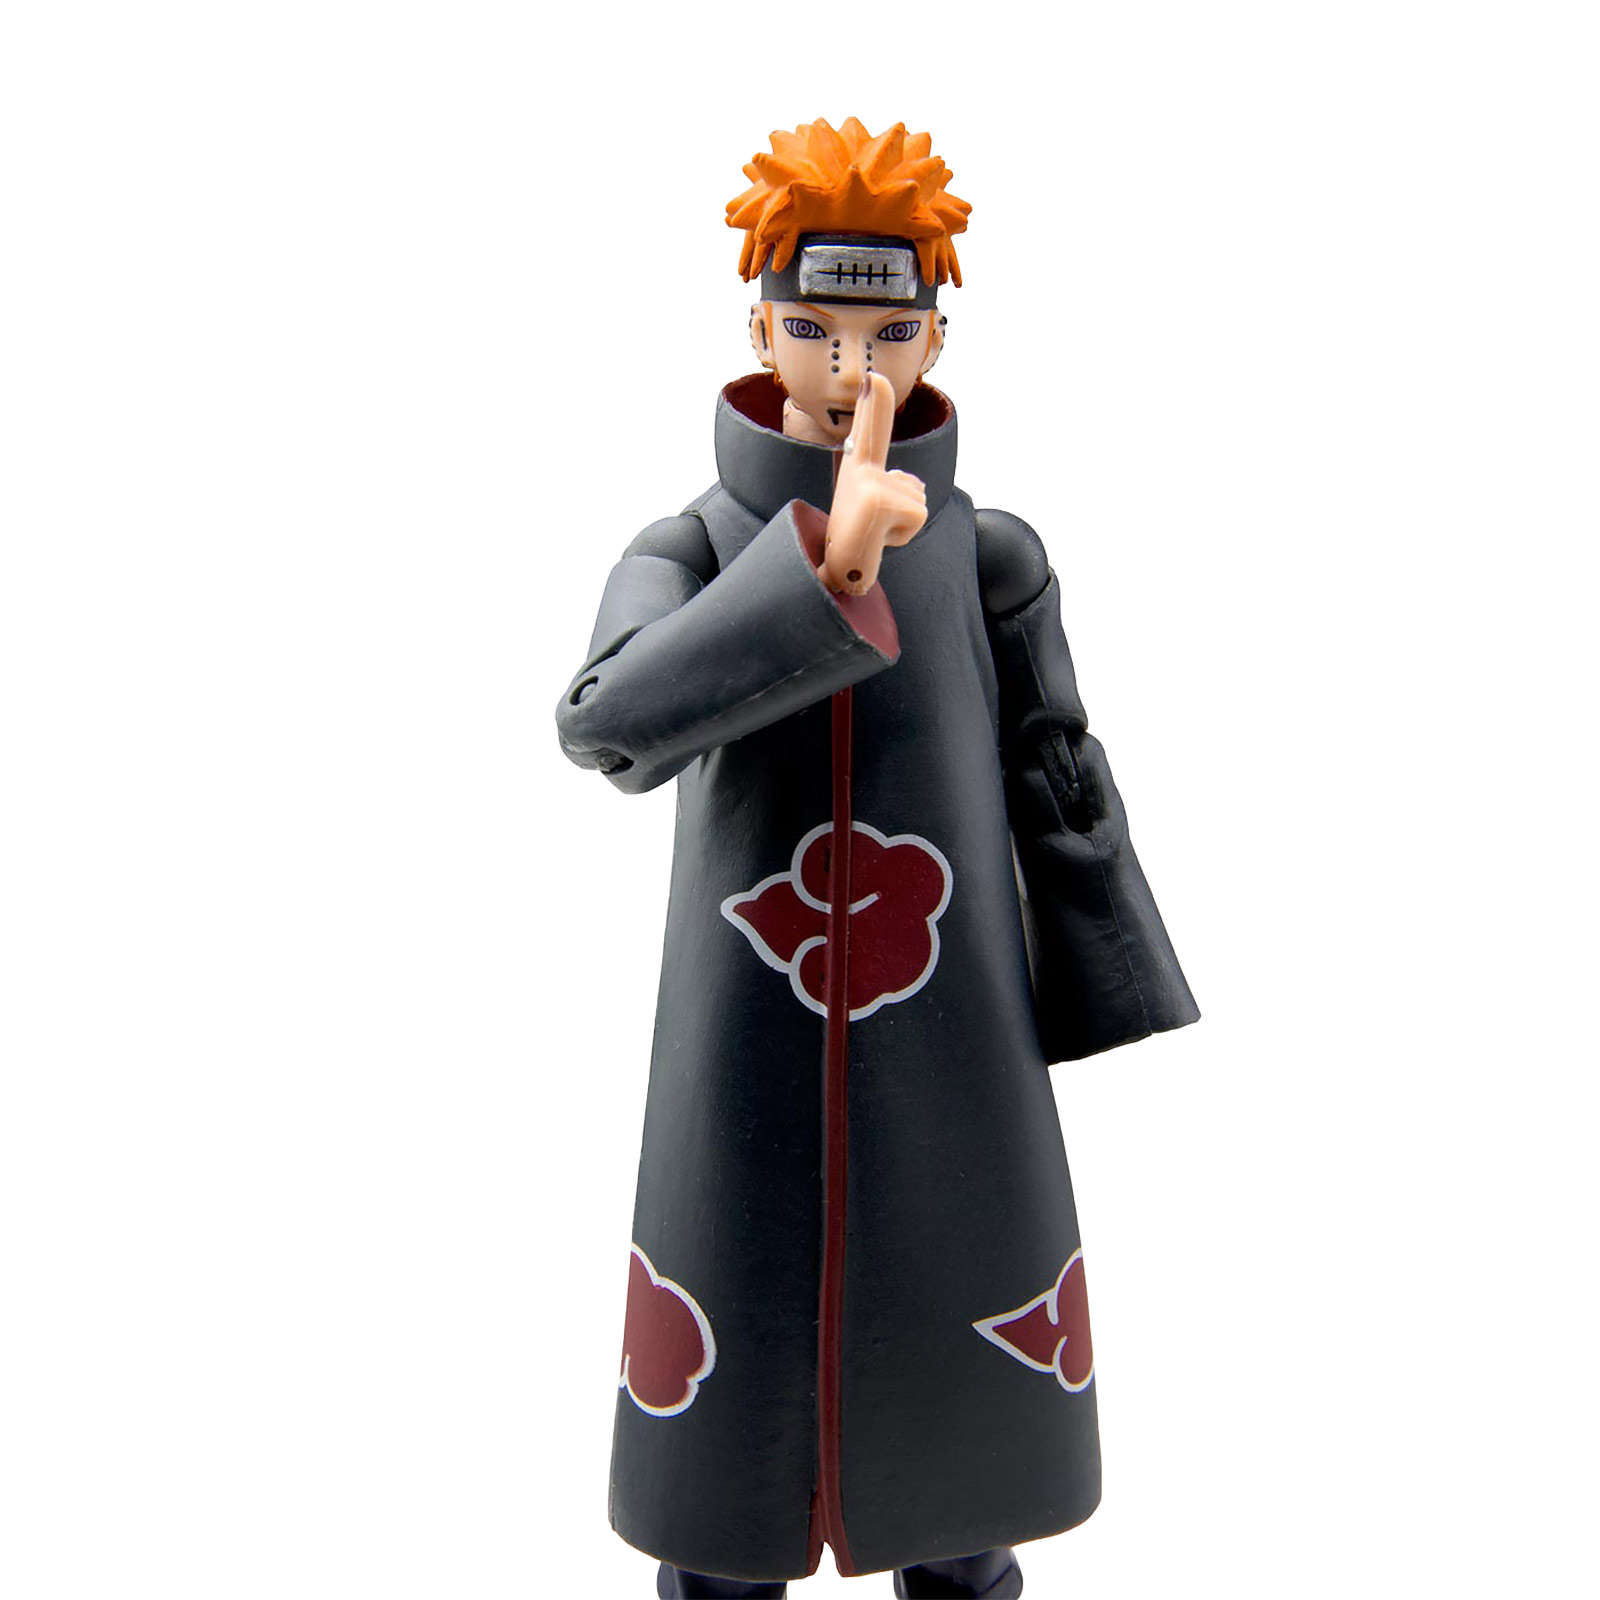 Naruto Shippuden - Naruto vs. Pain Figure Set Special Edition